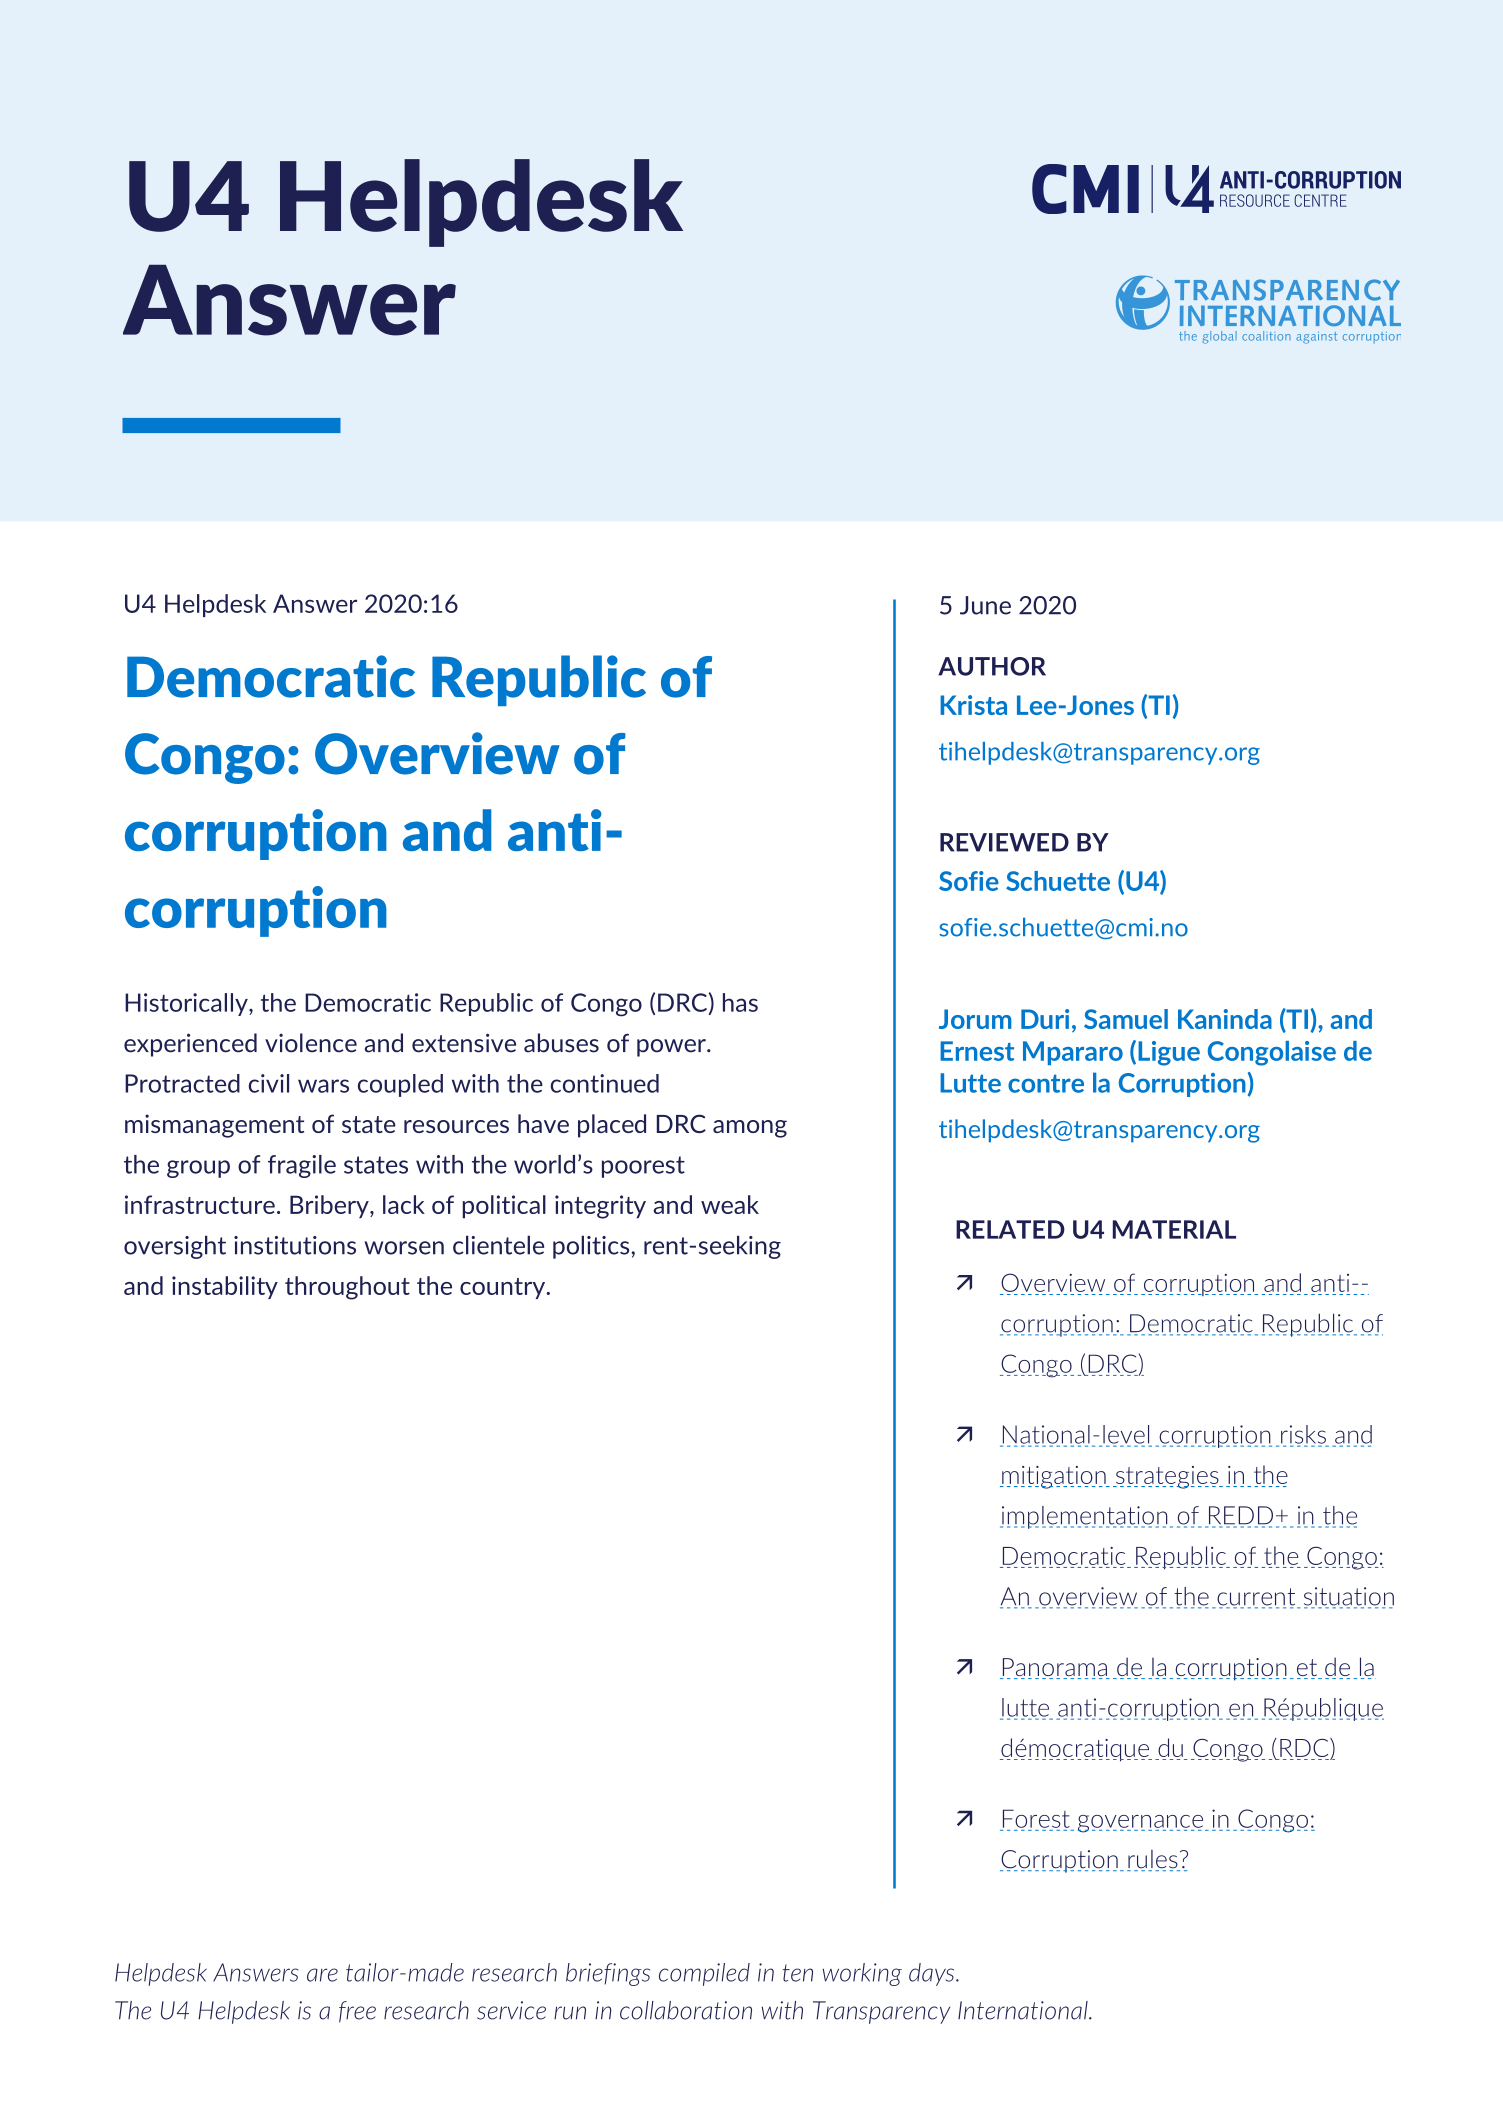 Democratic Republic of Congo: Overview of corruption and anti-corruption